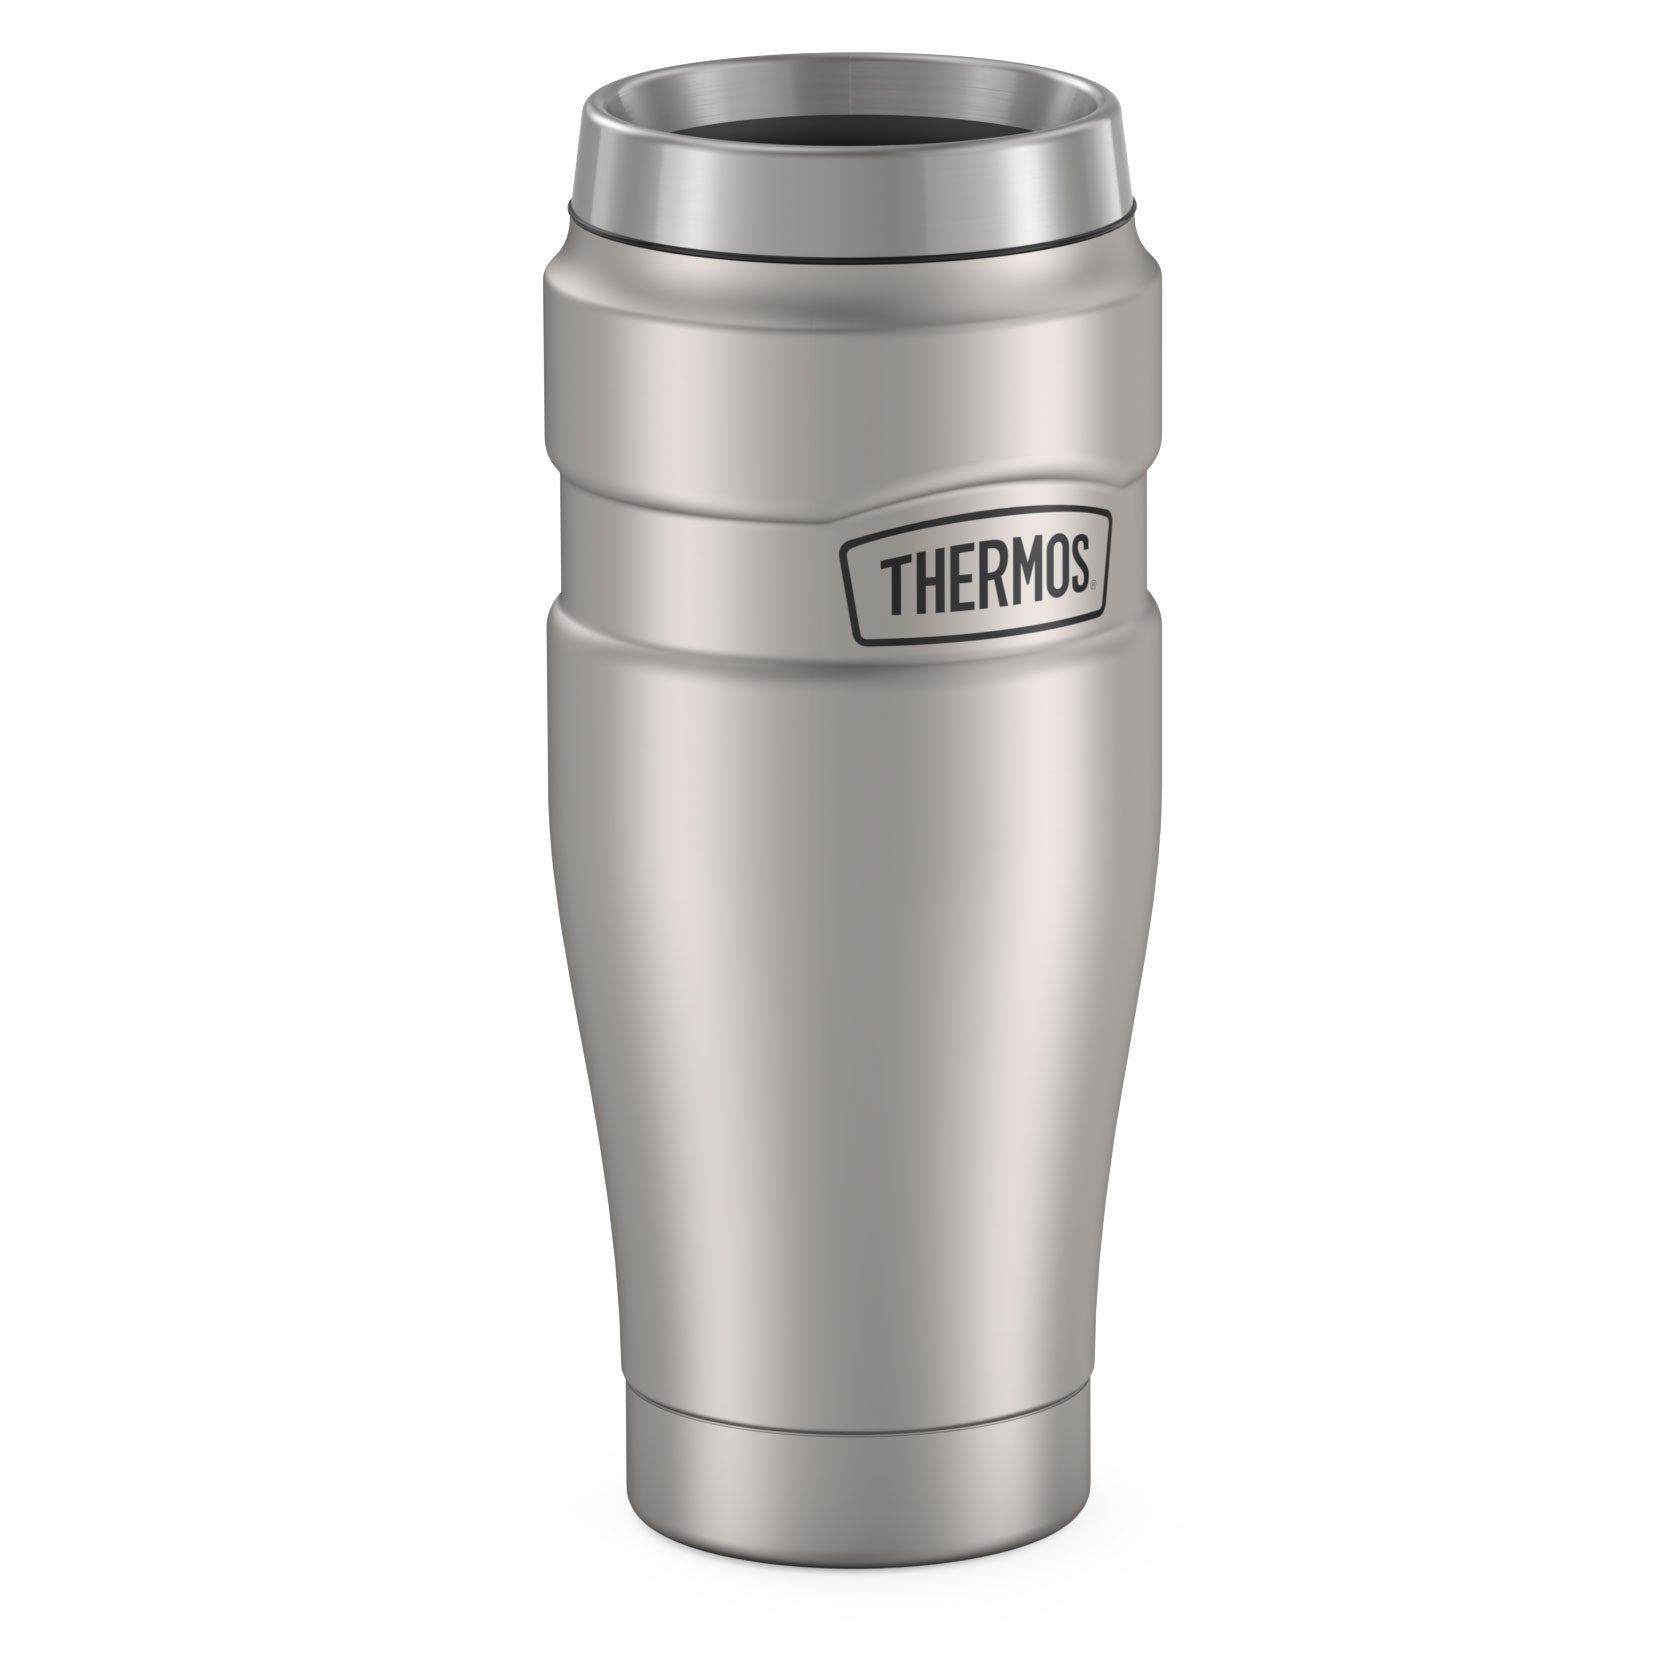 Thermos Travel Mug, 16 Ounce